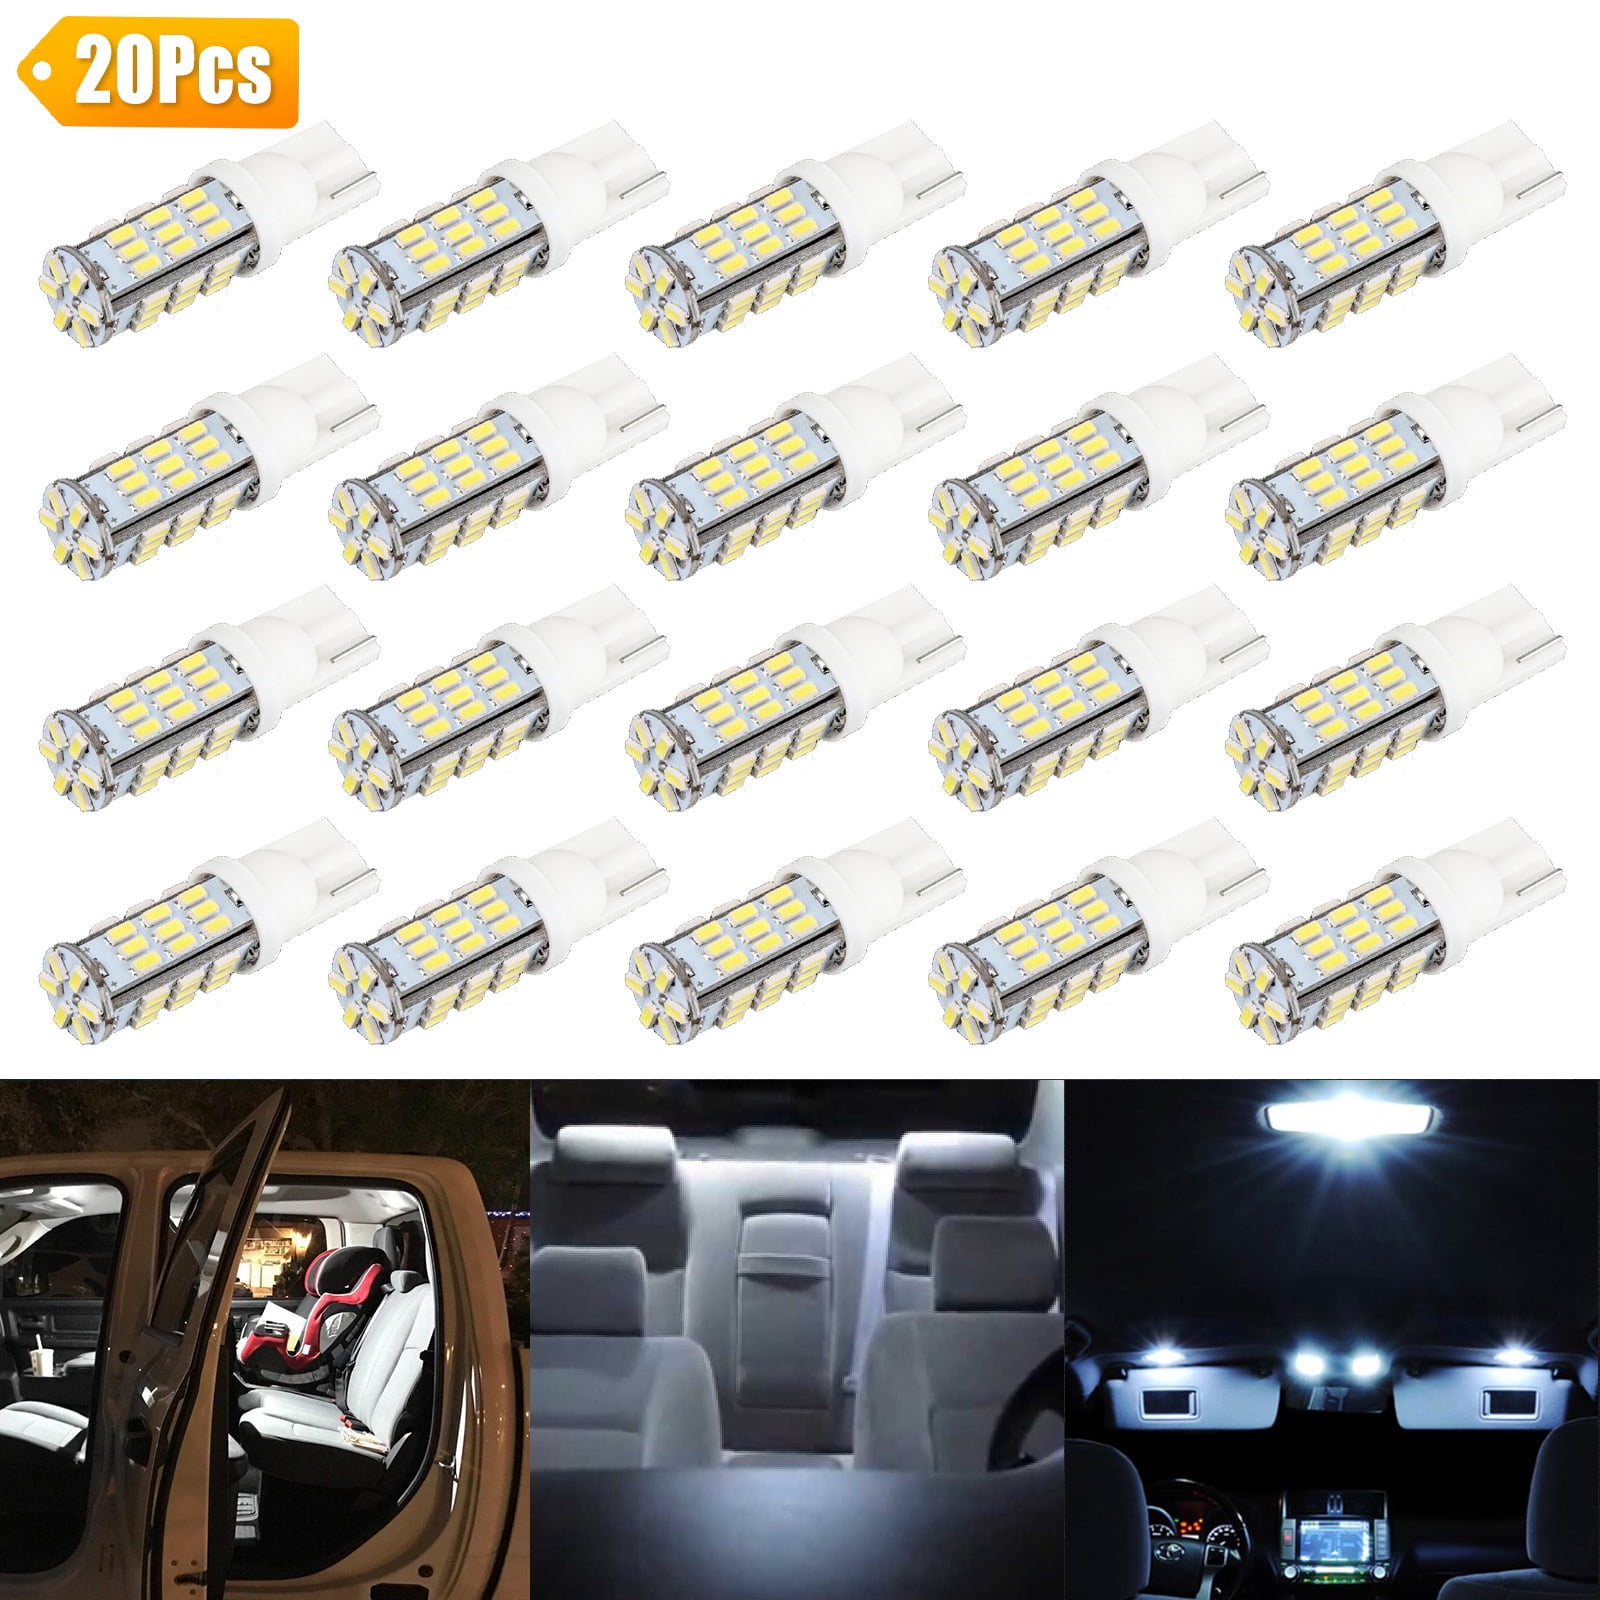 Yolu 2Pcs Super Bright RV Trailer T10 921 194 42-SMD 12V Car Backup Reverse LED Lights Bulbs Light Width Lamp Xenon White 